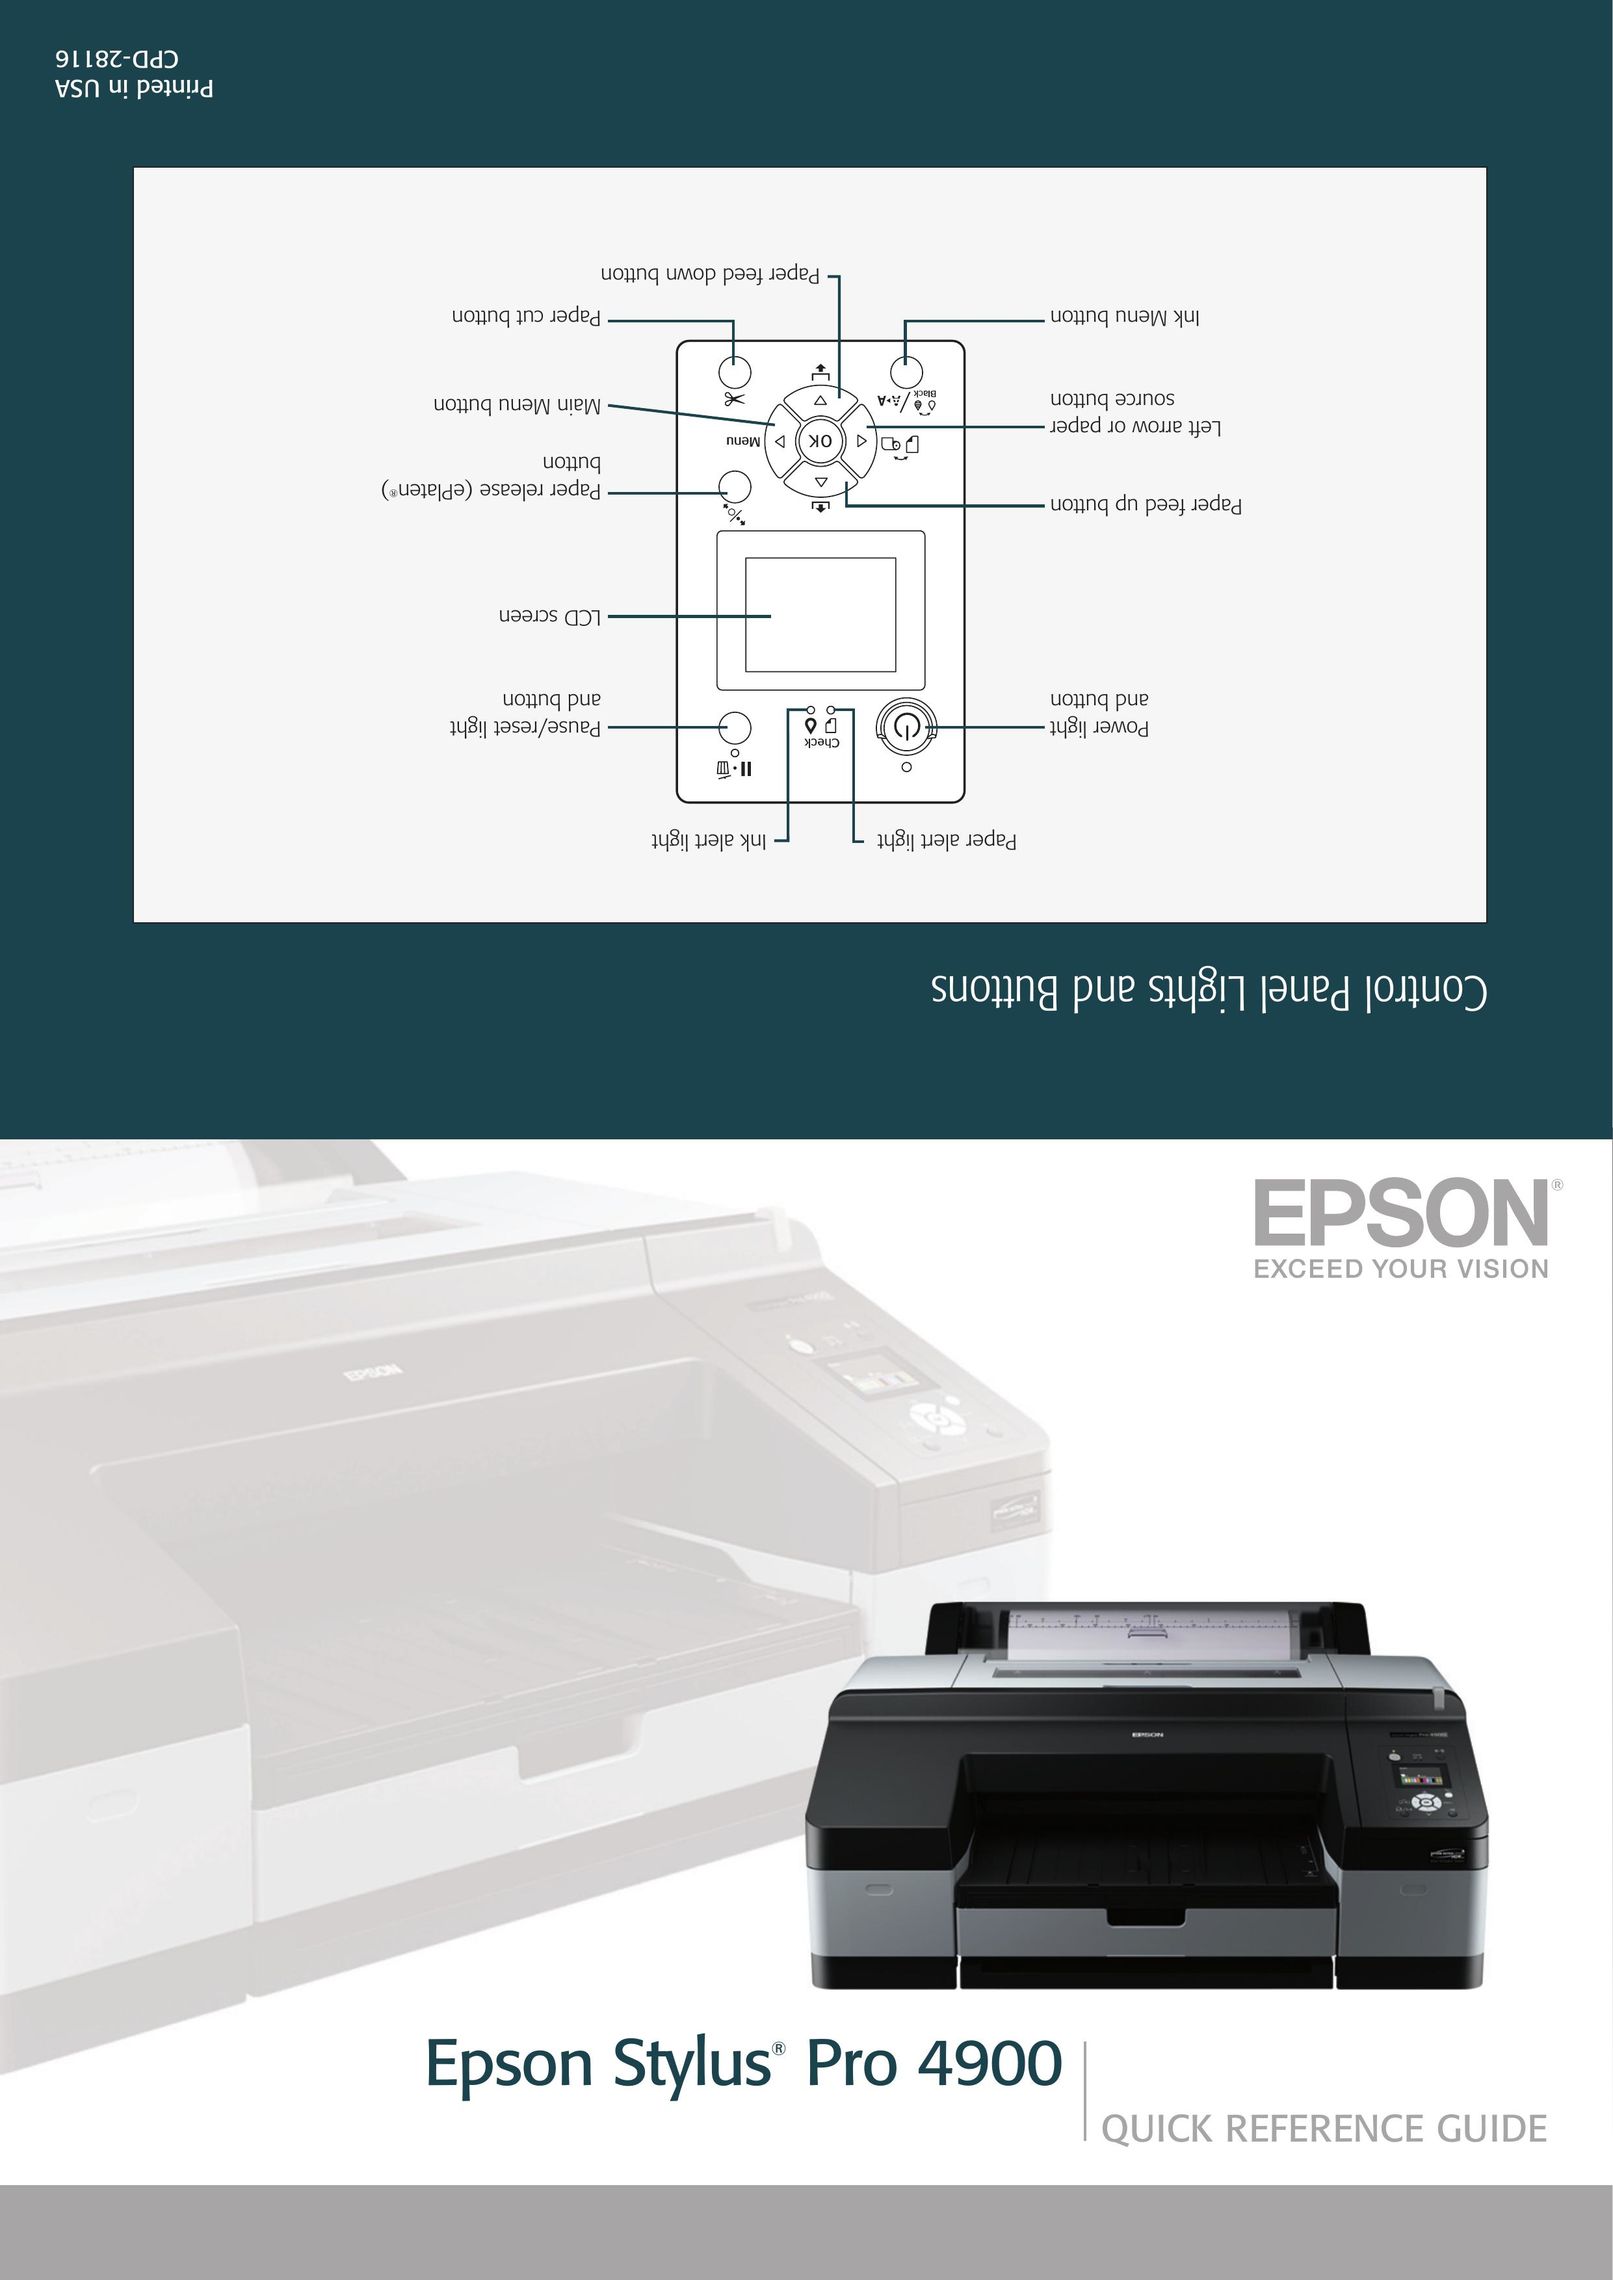 Garmin PRO 4900 All in One Printer User Manual